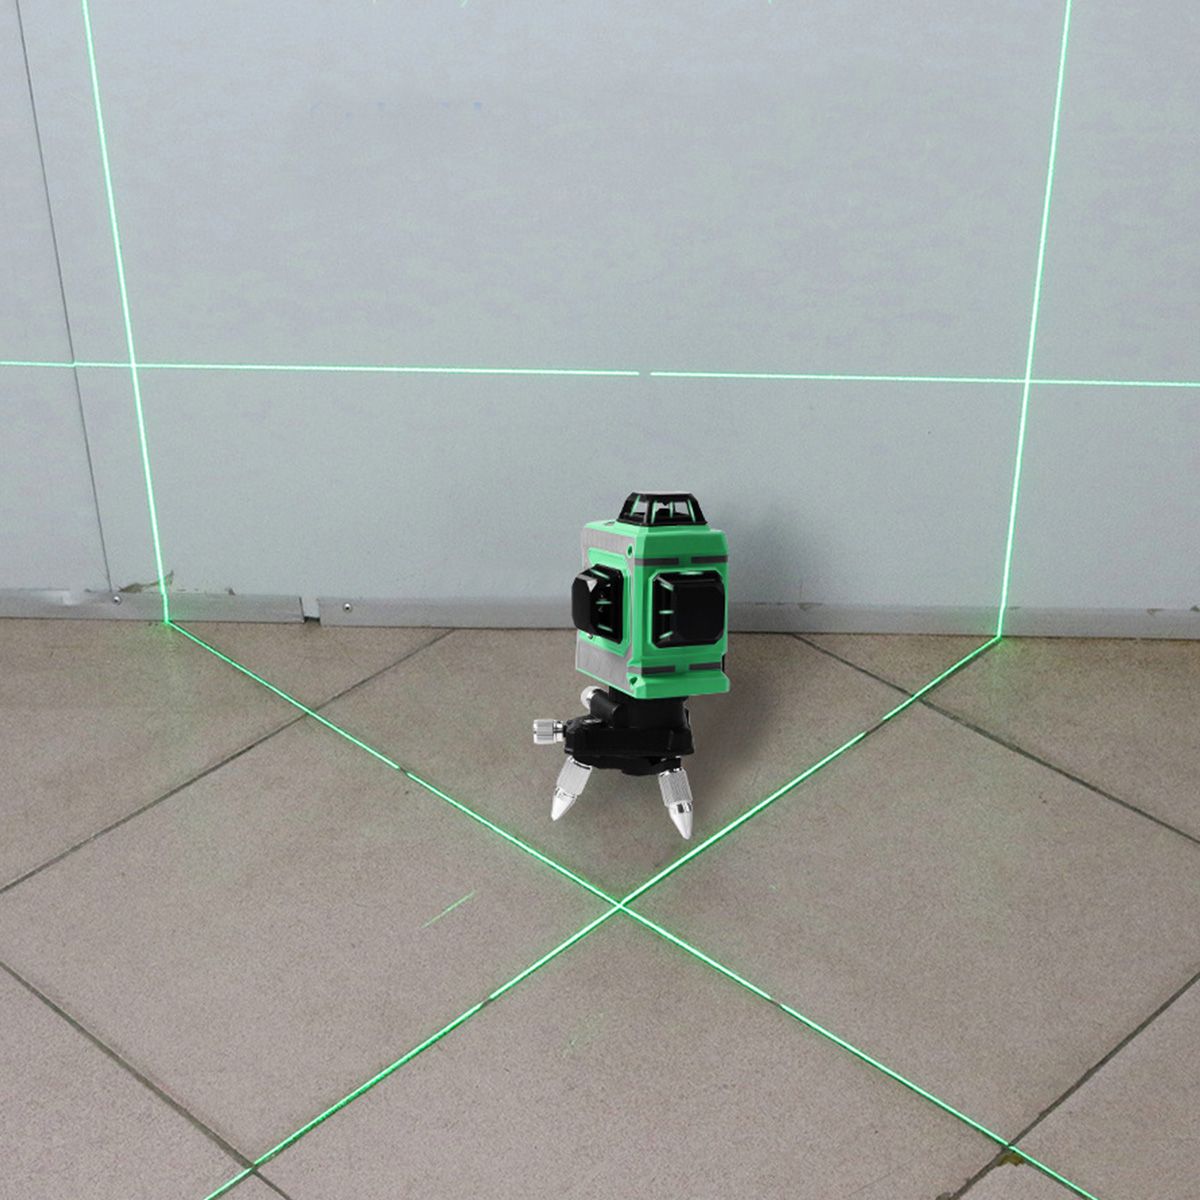 3D-12-Lines-Self-Leveling-Green-Laser-Beam-Level-Auto-360deg-Rotary-Cross-Measure-1468315